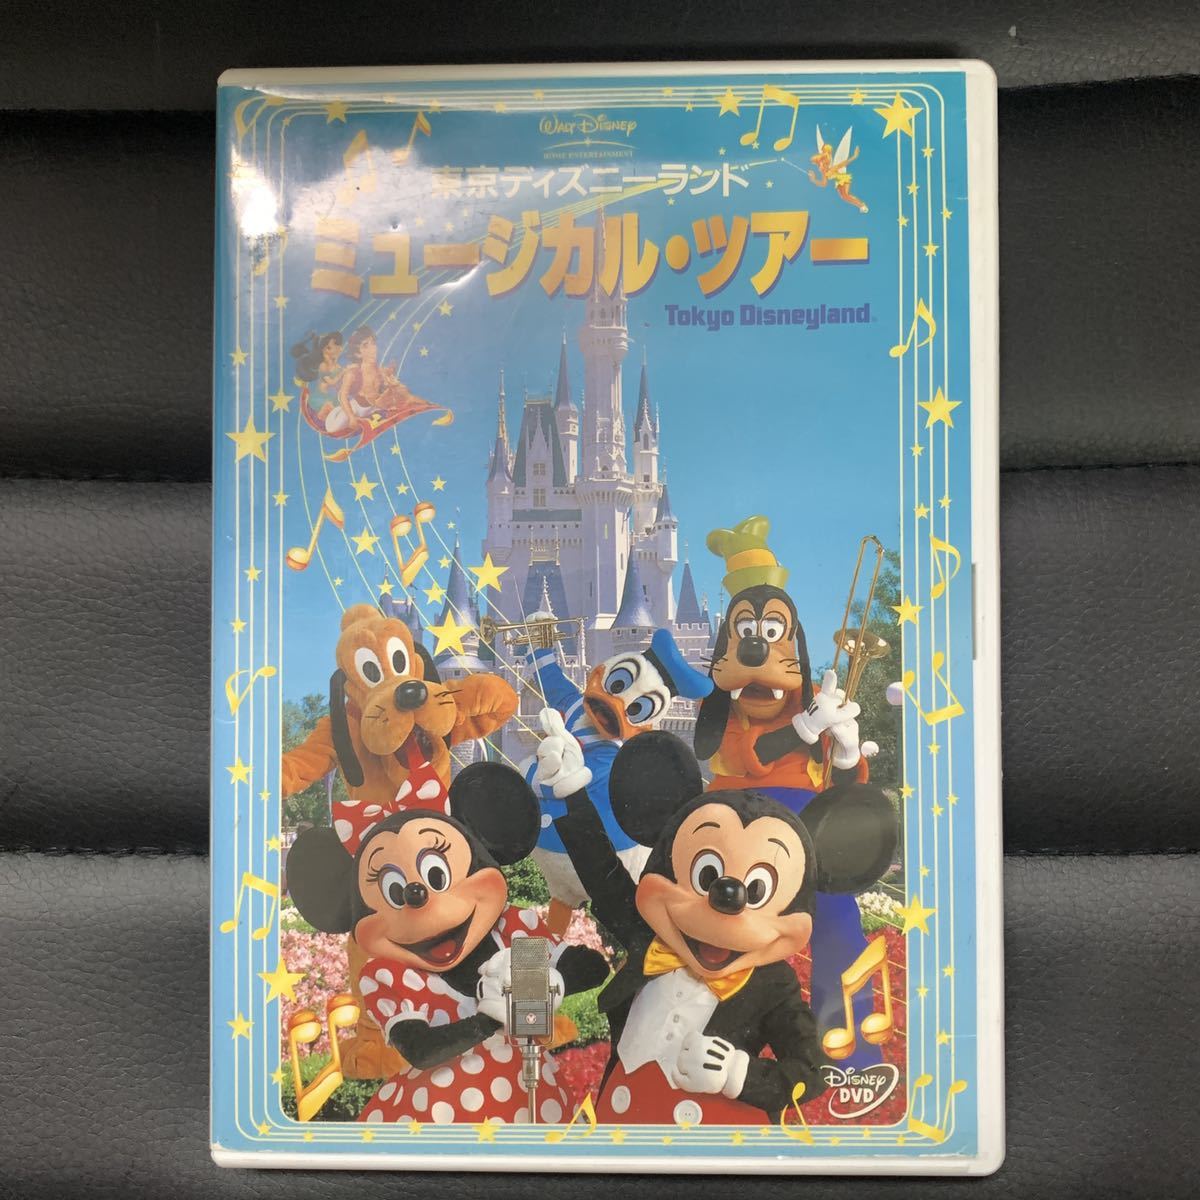  Tokyo Disney Land мюзикл * Tour DVD